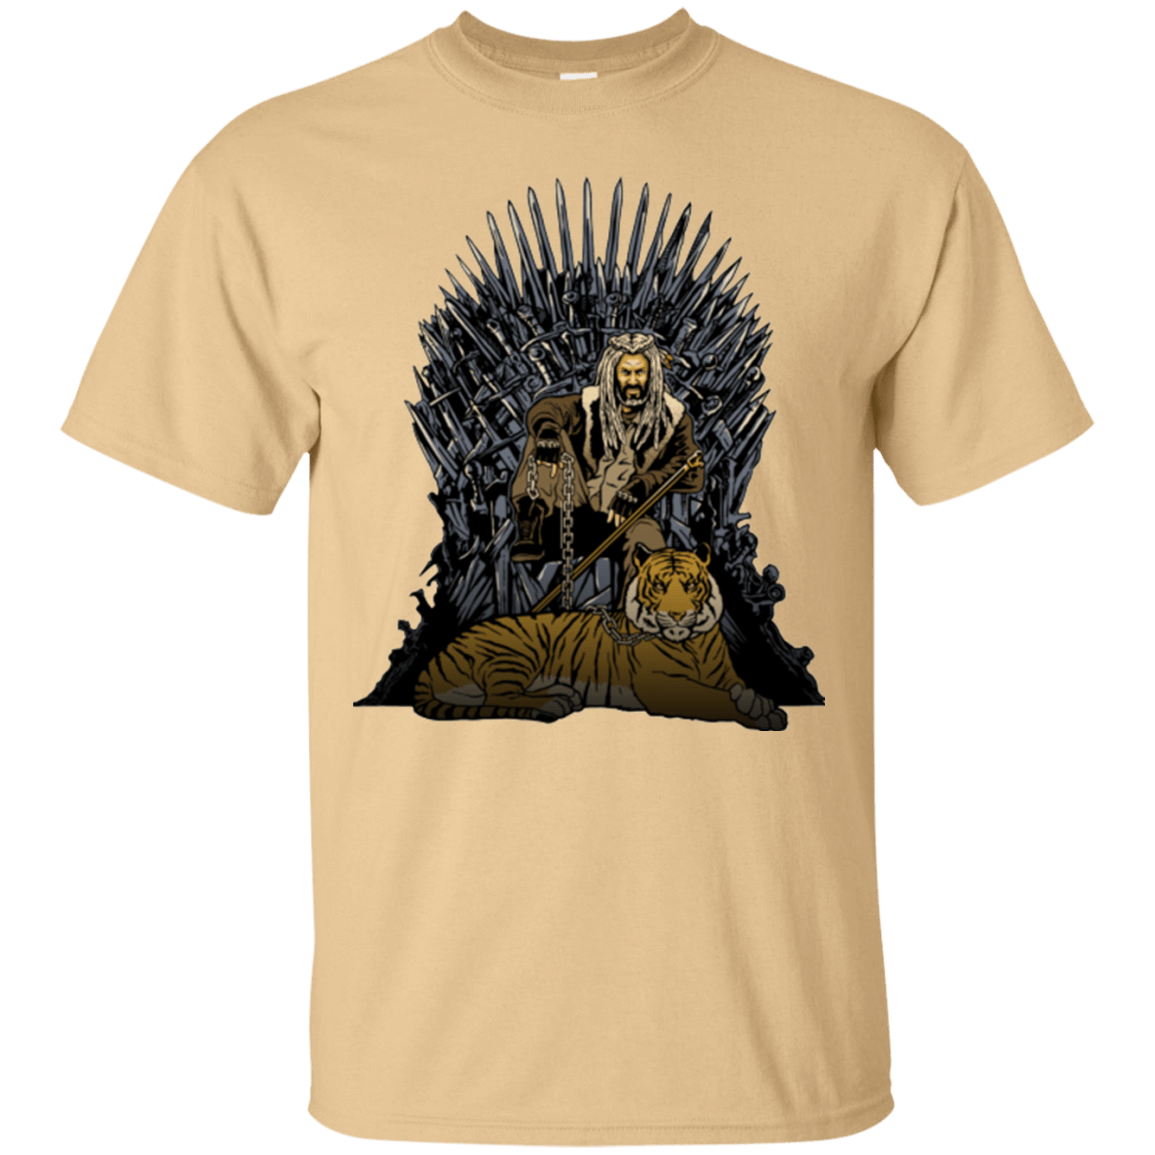 T-Shirts Vegas Gold / Small King and Tiger T-Shirt